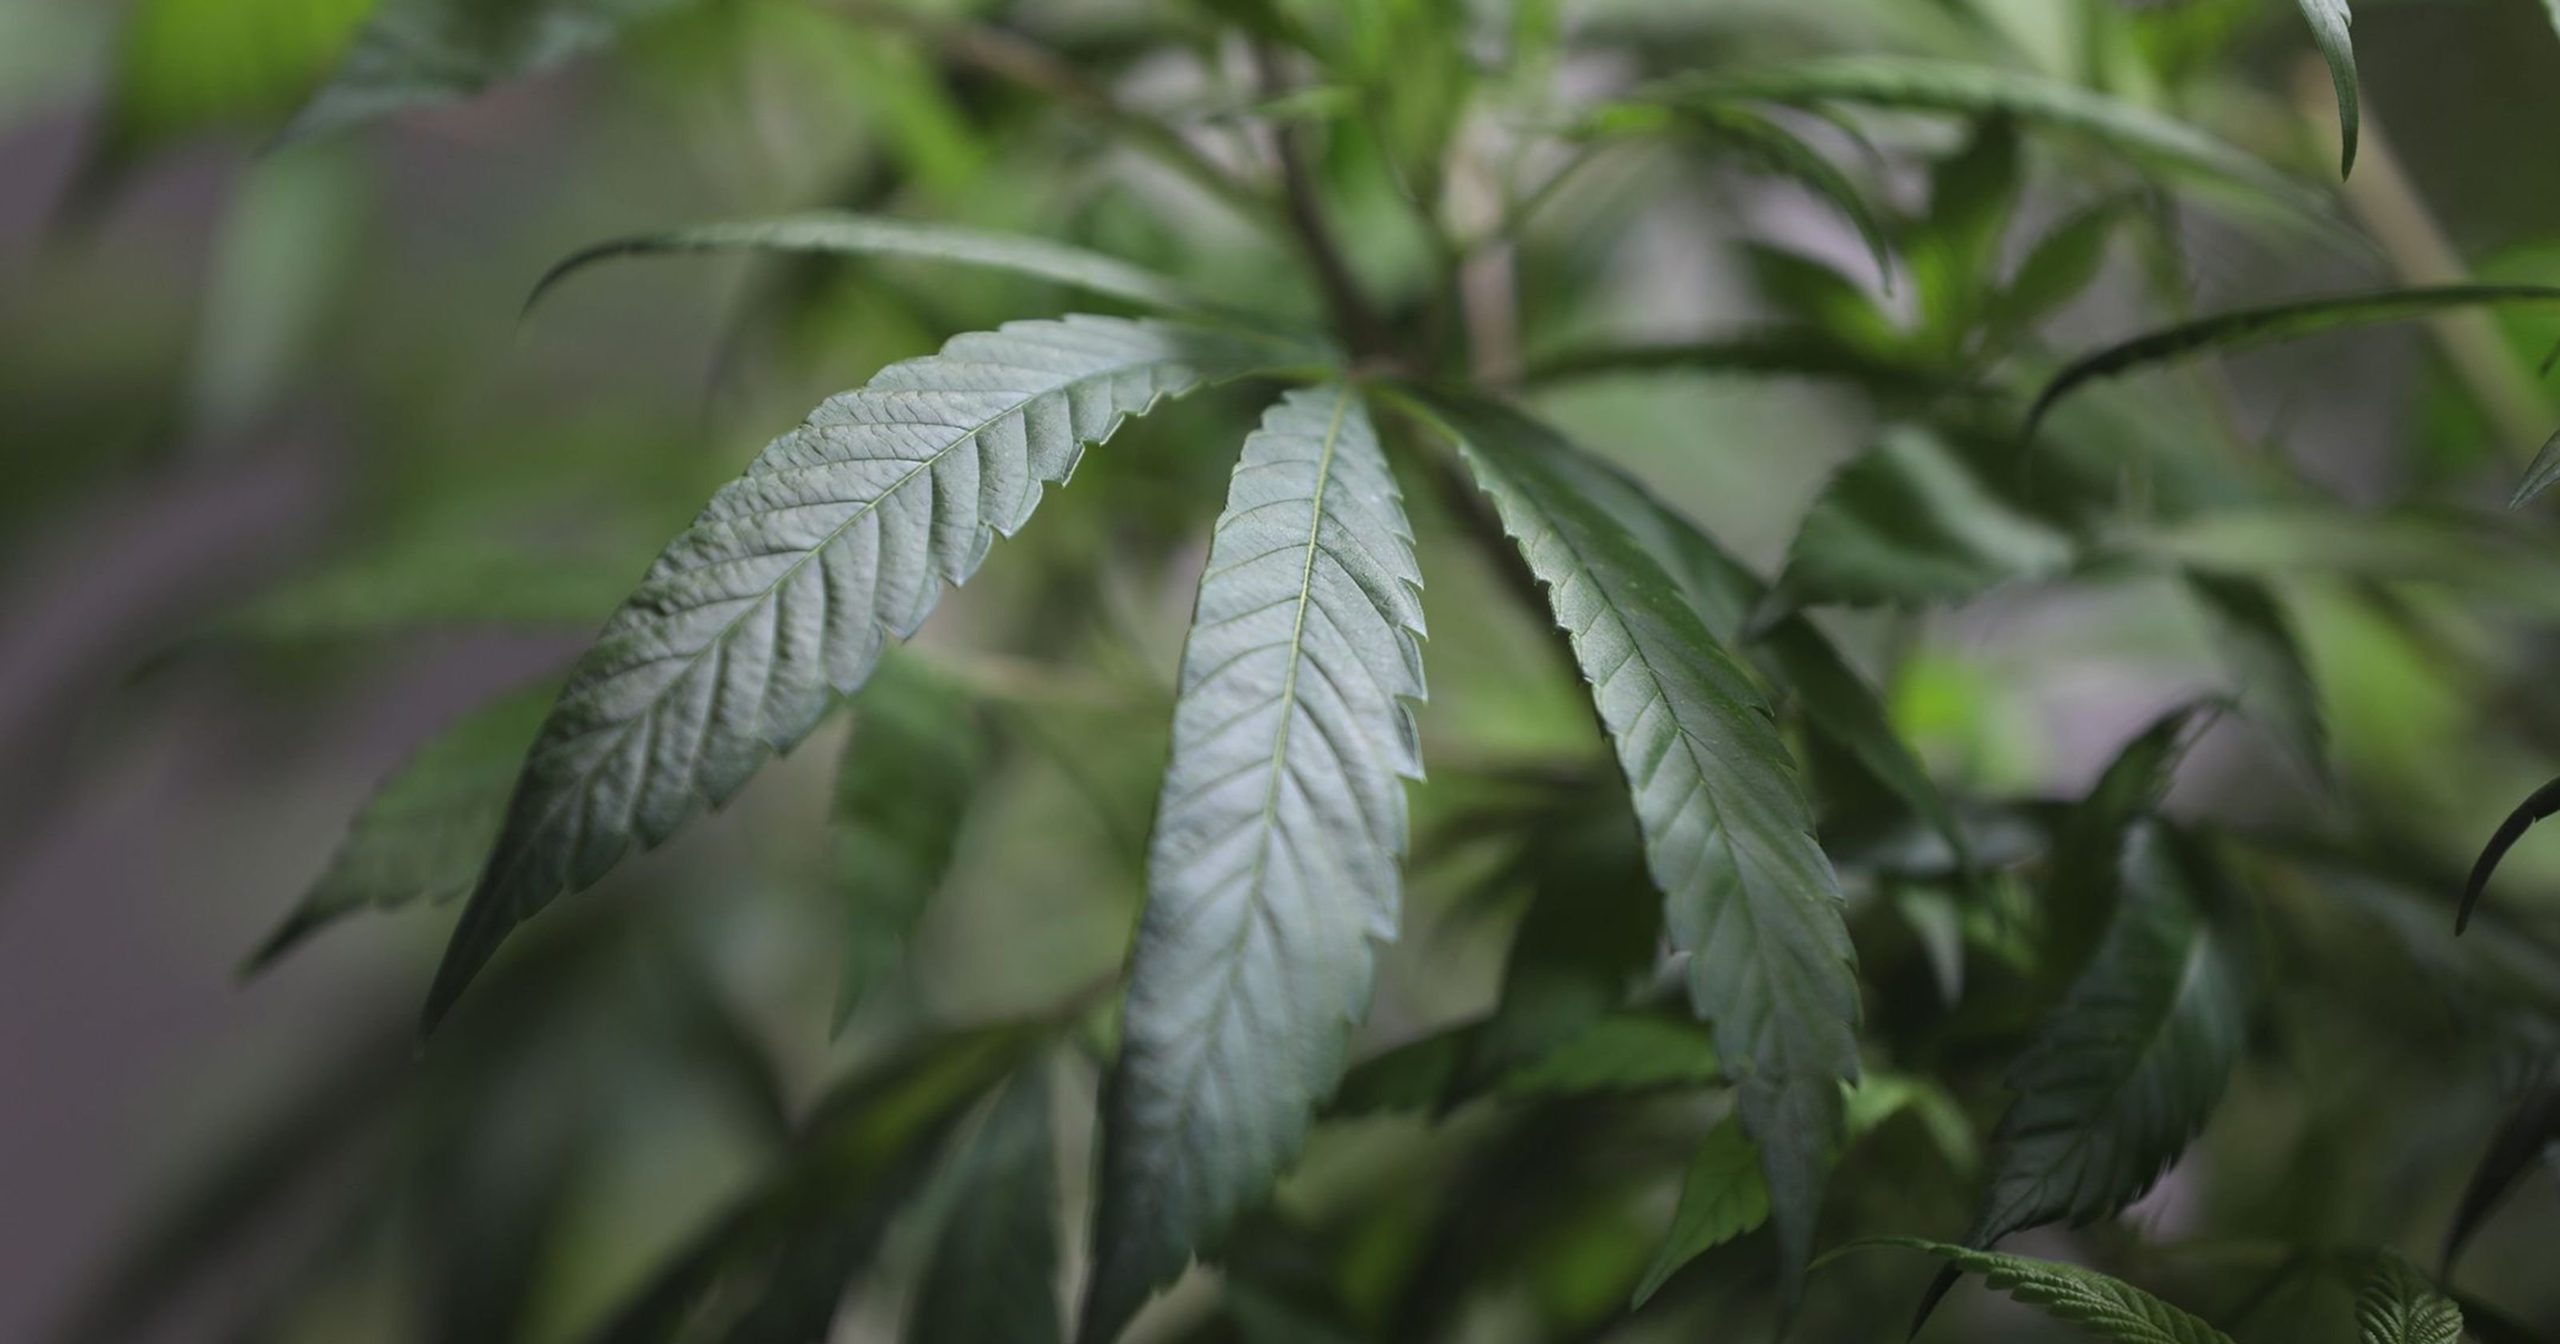 NYS Panel to craft legislation to legalize marijuana established by Gov. Cuomo